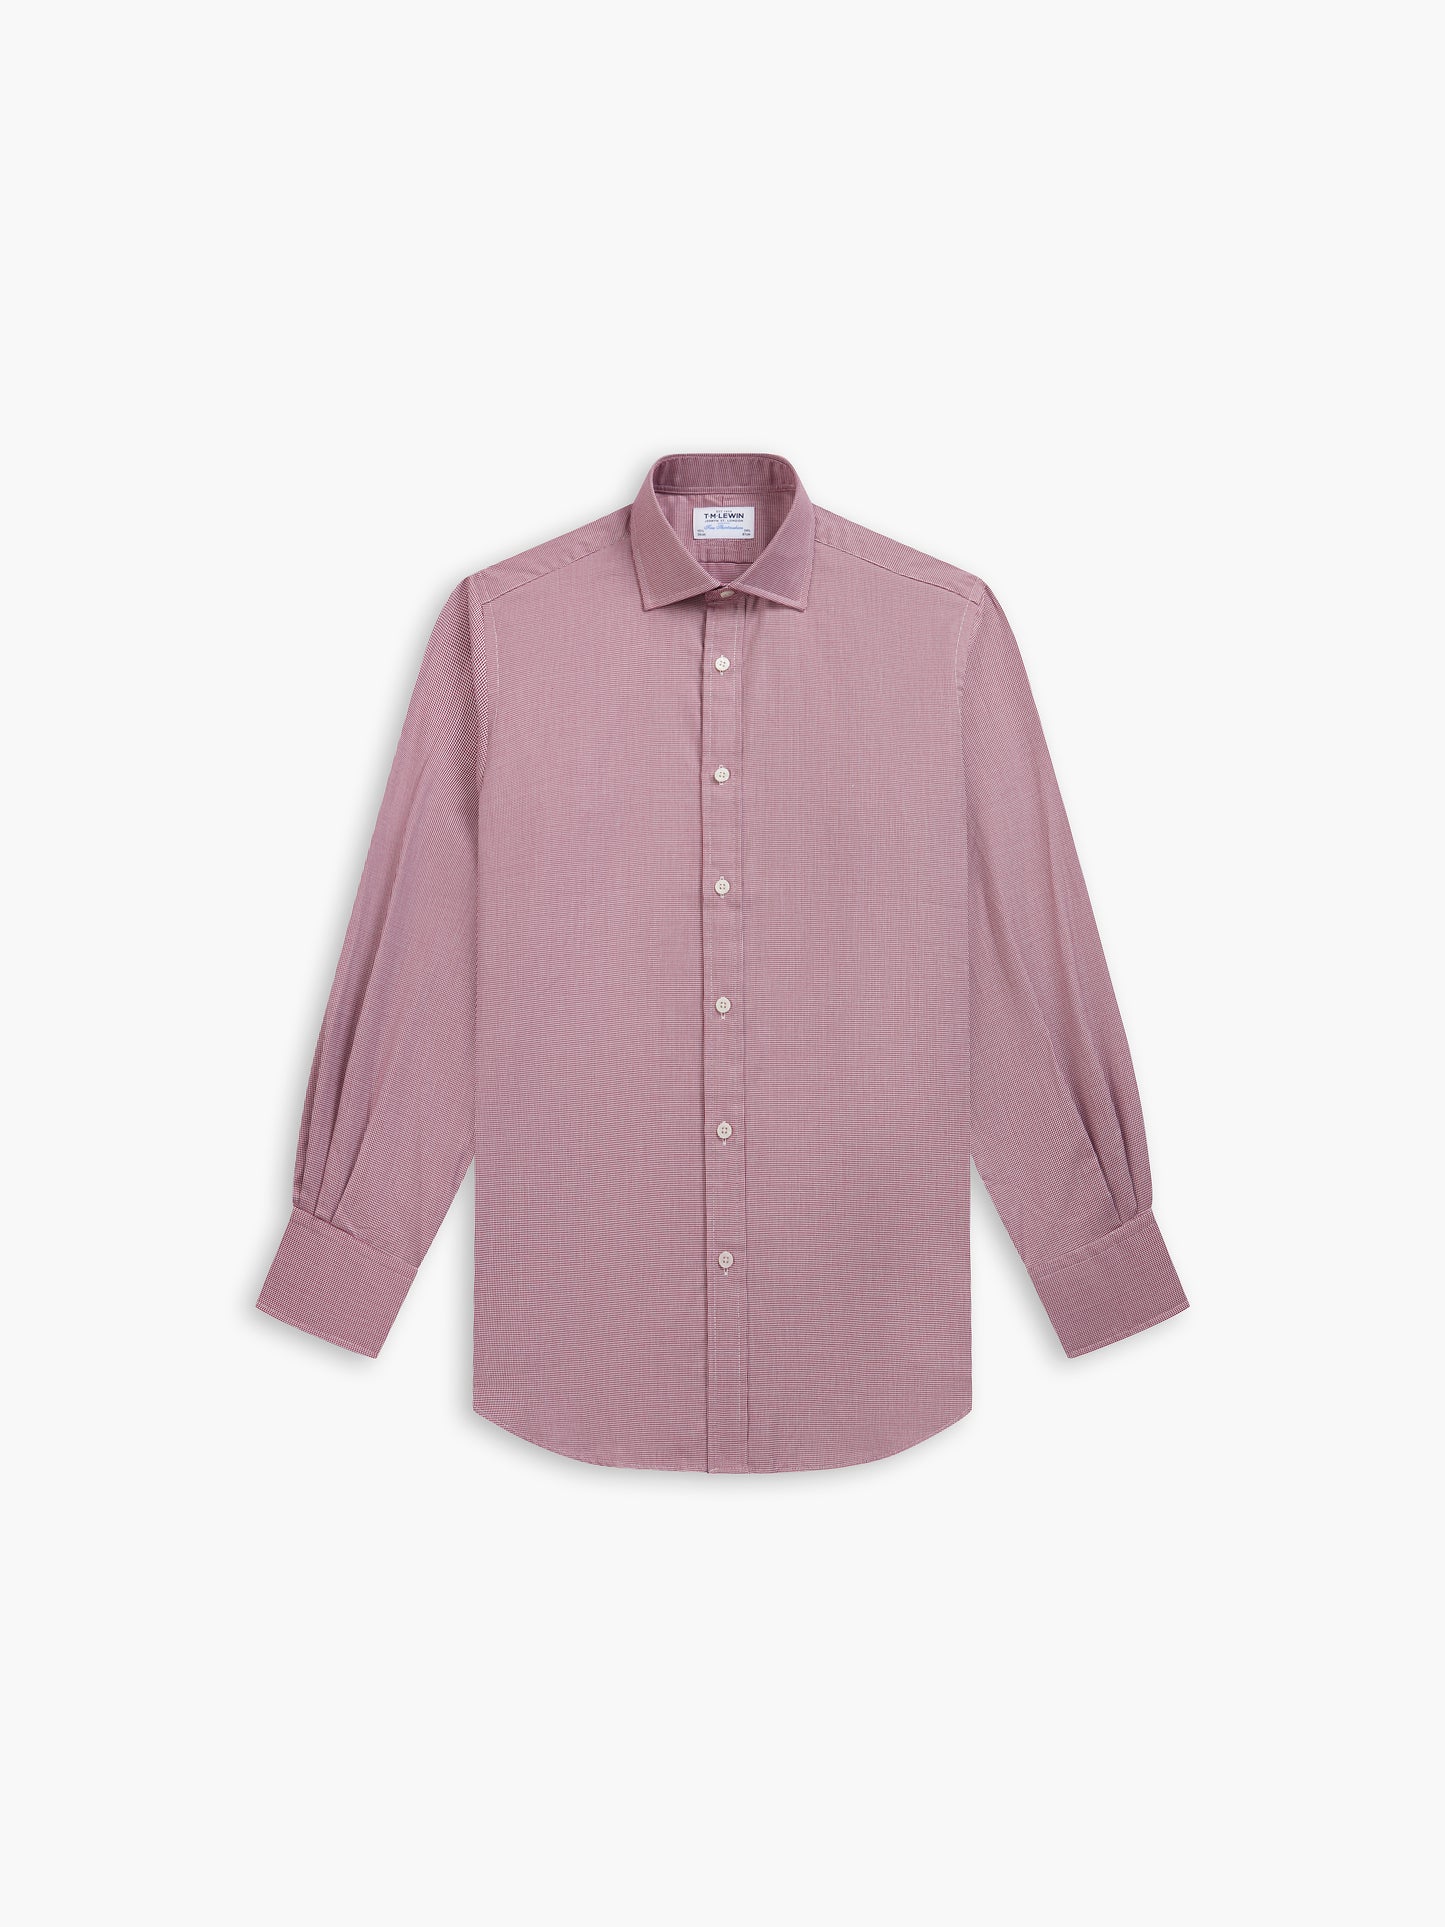 Burgundy Dogtooth Plain Weave Slim Fit Single Cuff Classic Collar Shirt